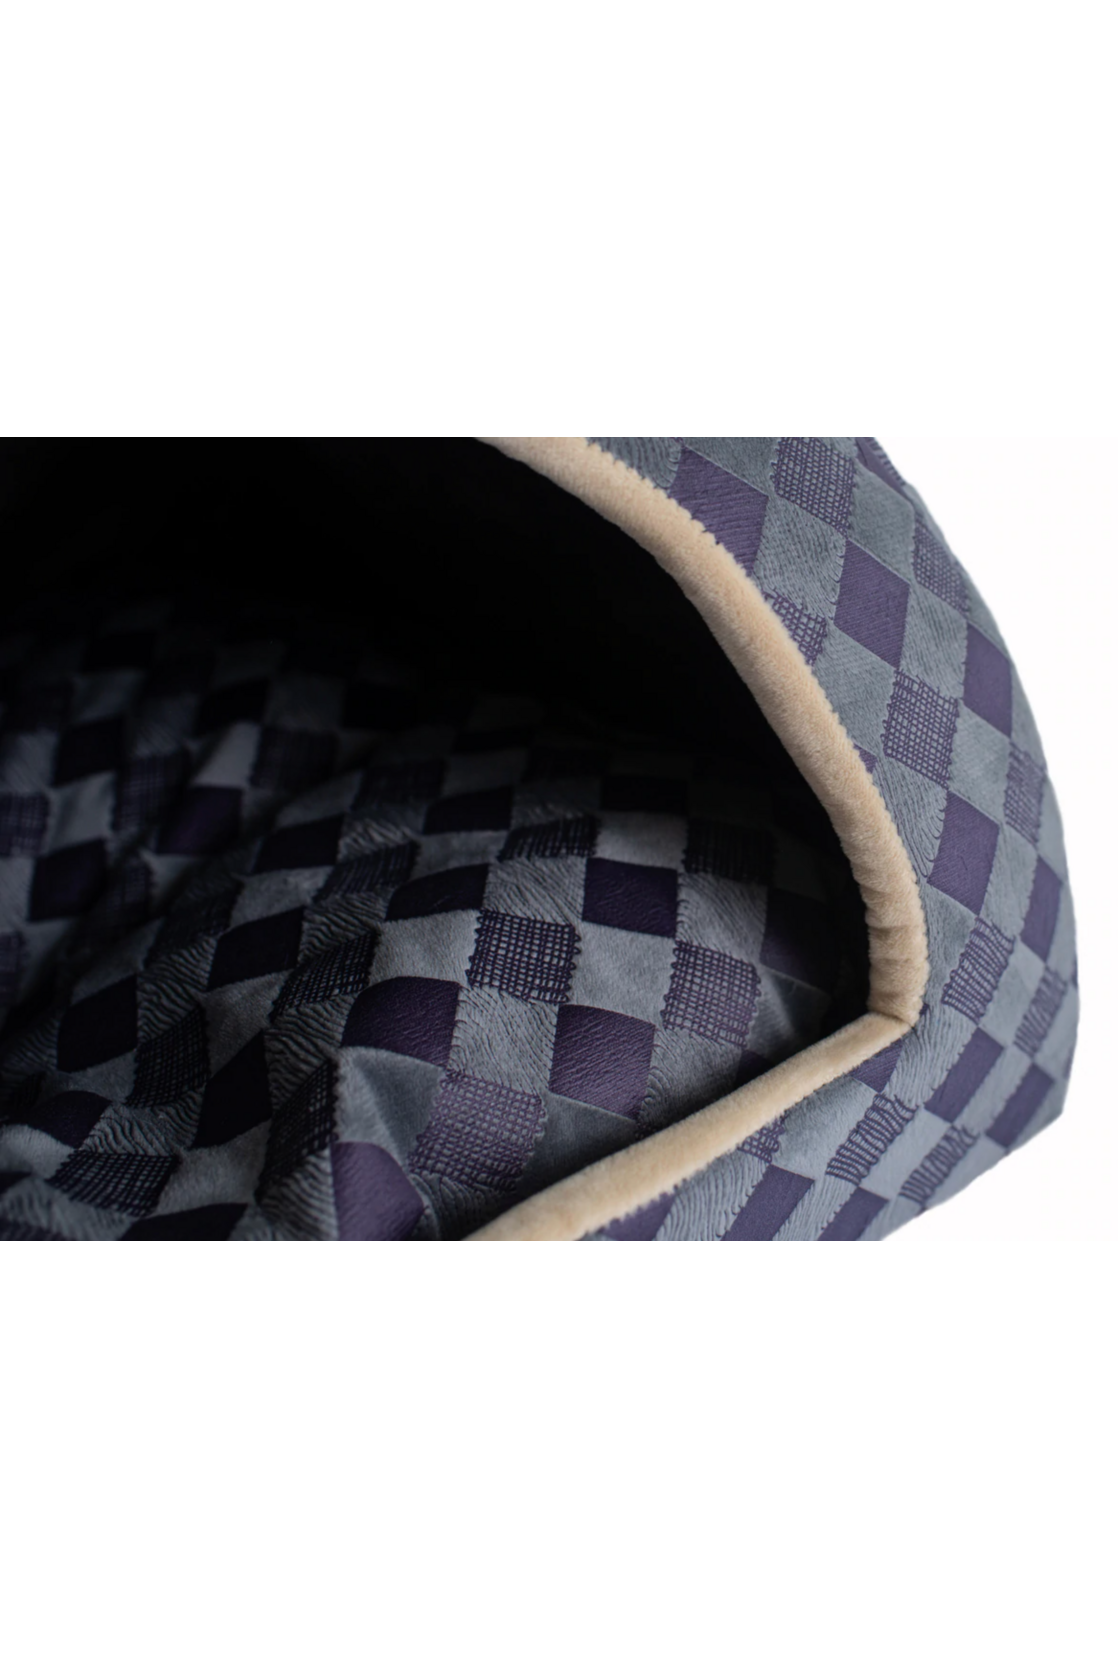 Purple Gray Checkered Cat Bed